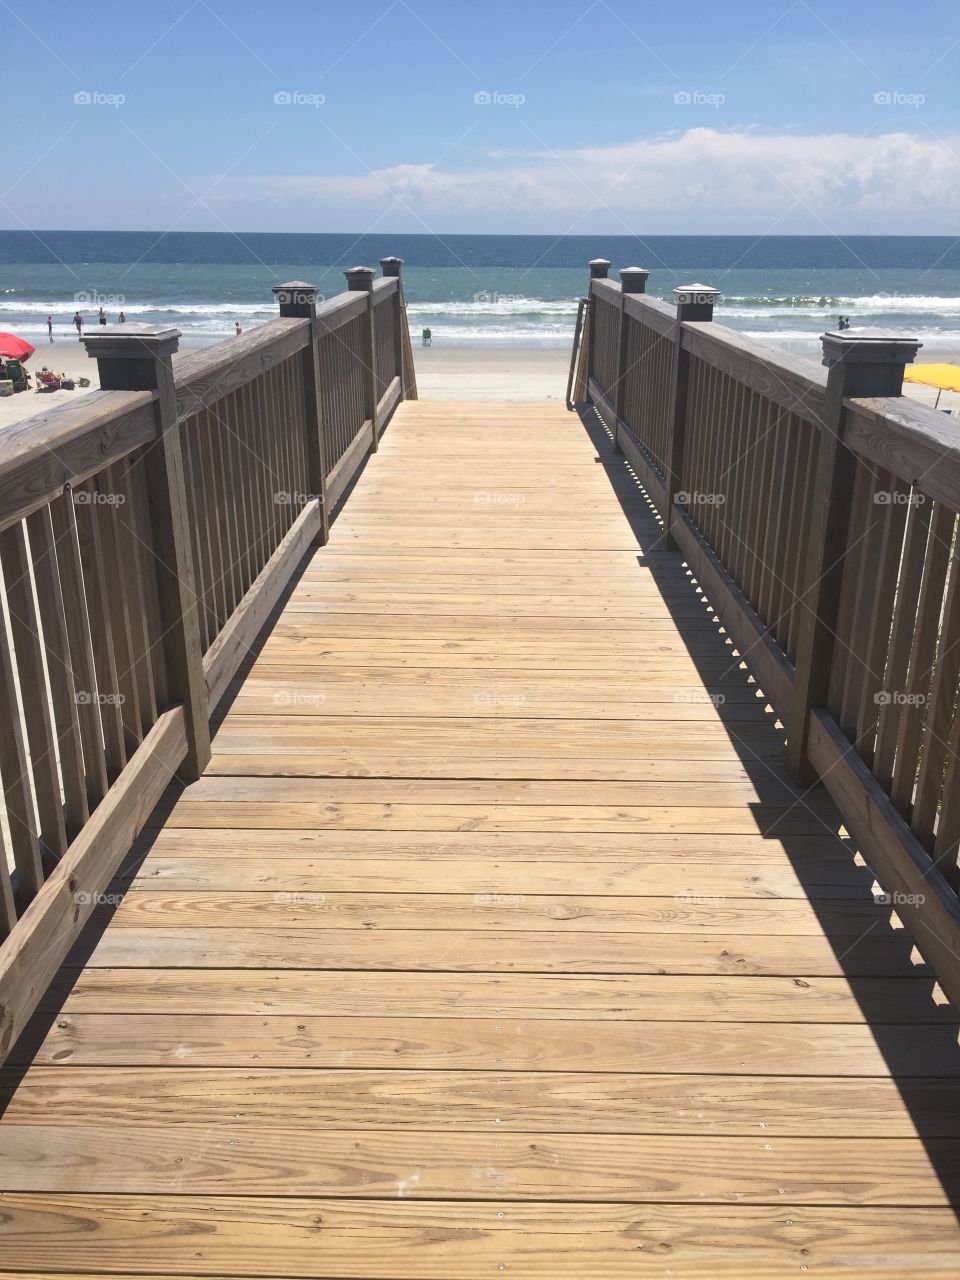 Boardwalk, walkway to the beach.